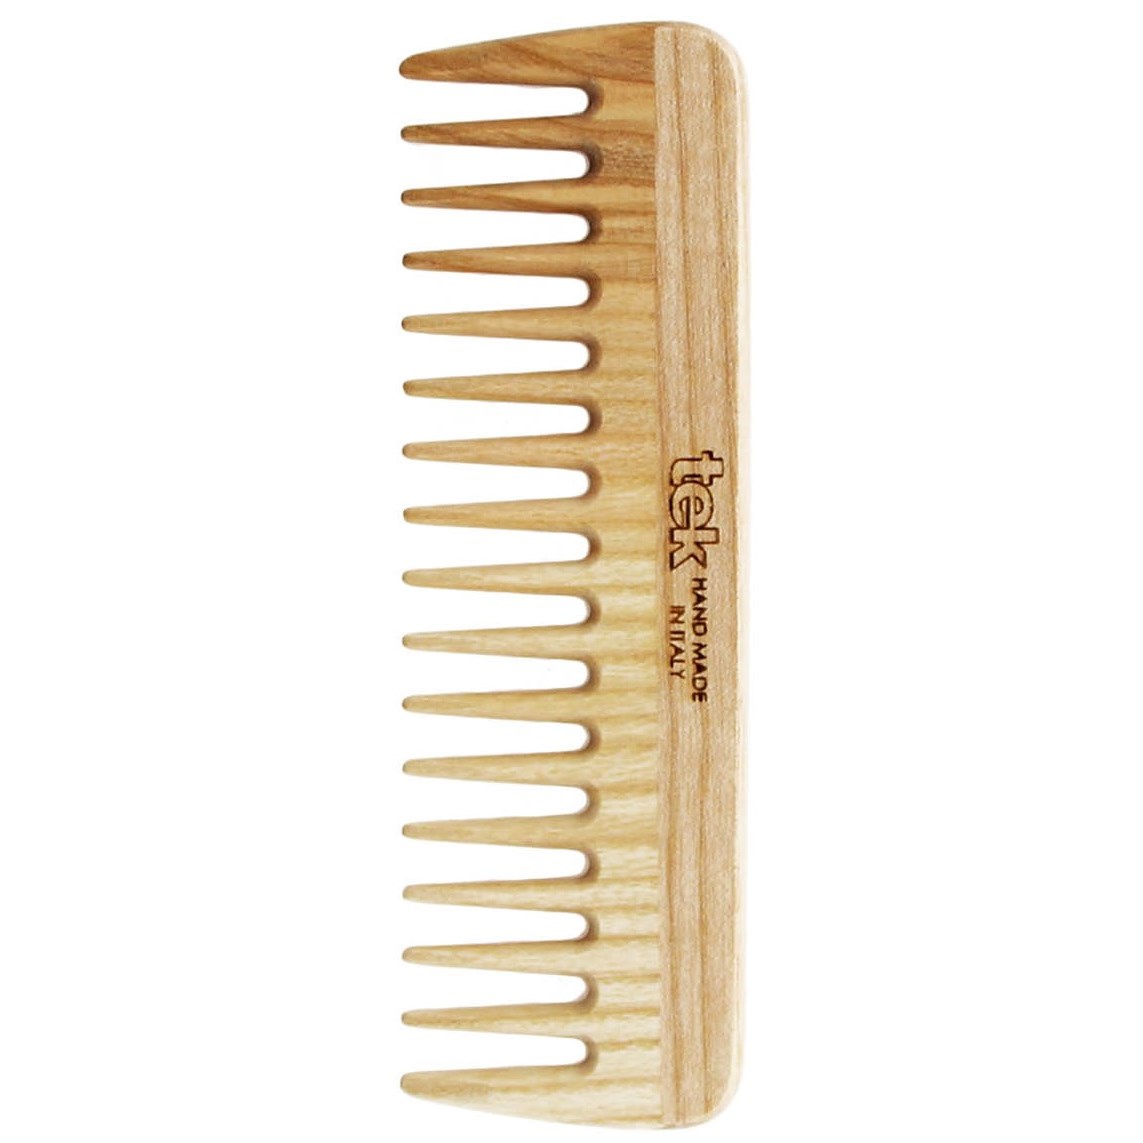 Bilde av Tek Medium Sized Wooden Comb With Wide Teeth